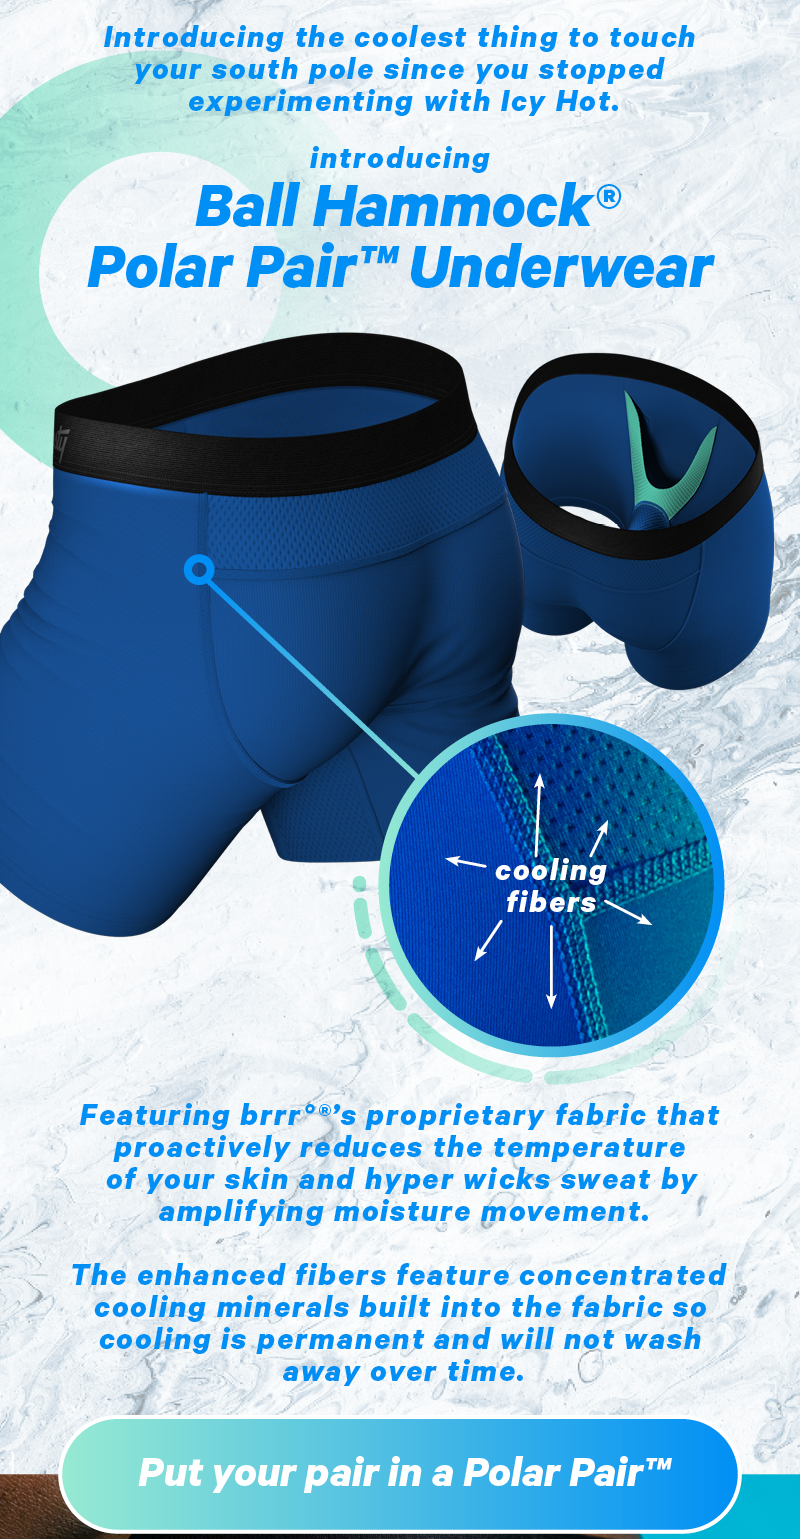 Shinesty: Introducing Ball Hammock Polar Pair pouch underwear